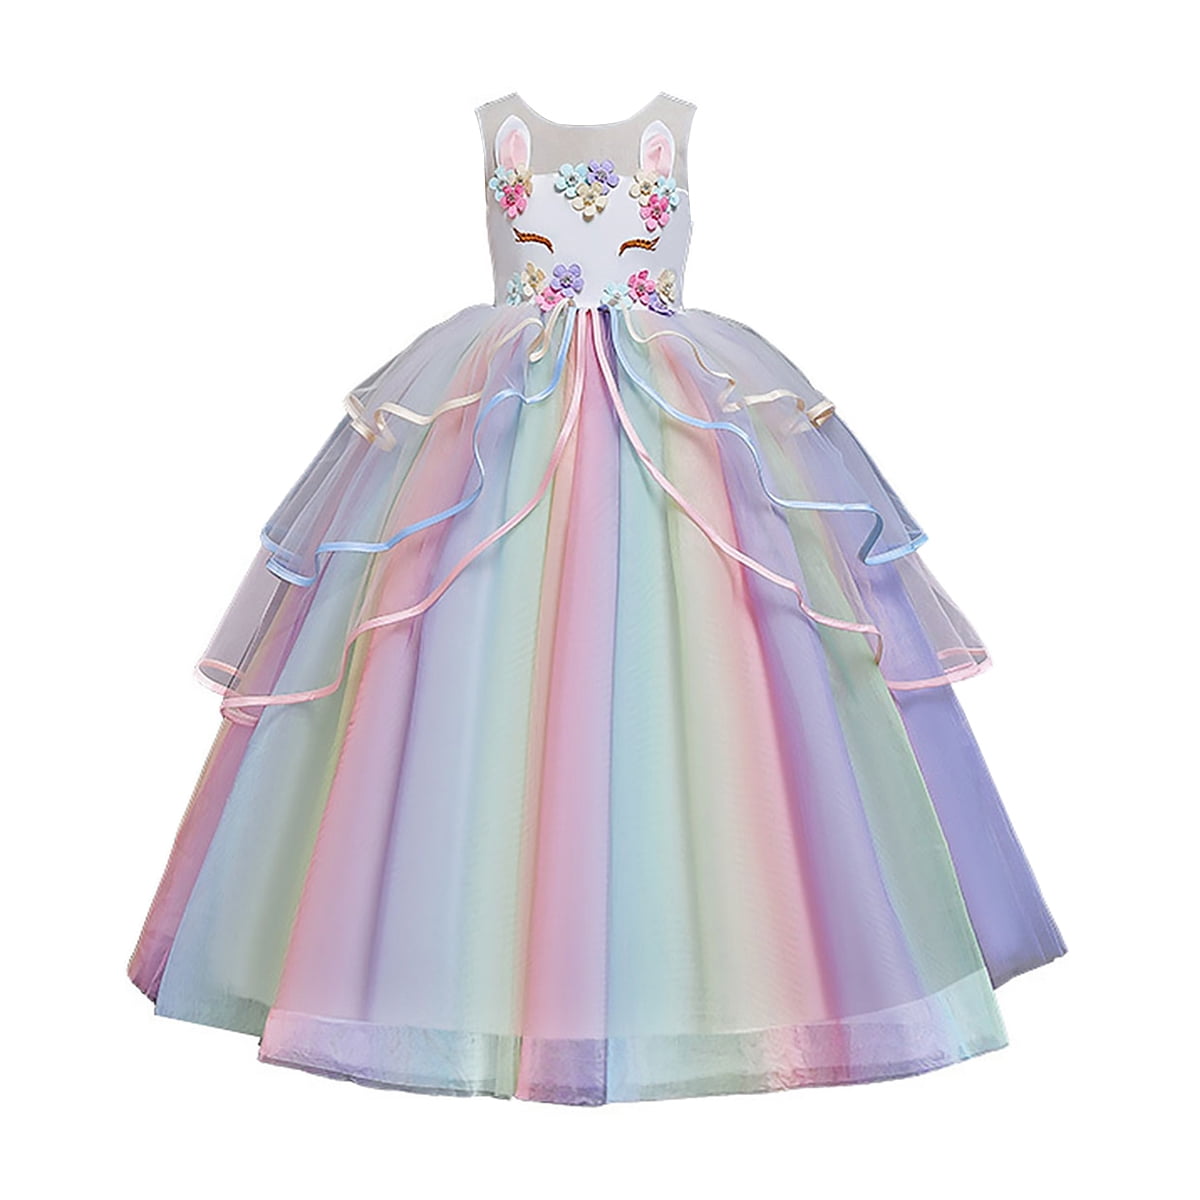 DEYOU Girls Cosplay Dress Costume Unicorn Princess Birthday Holiday Party Dresses Up